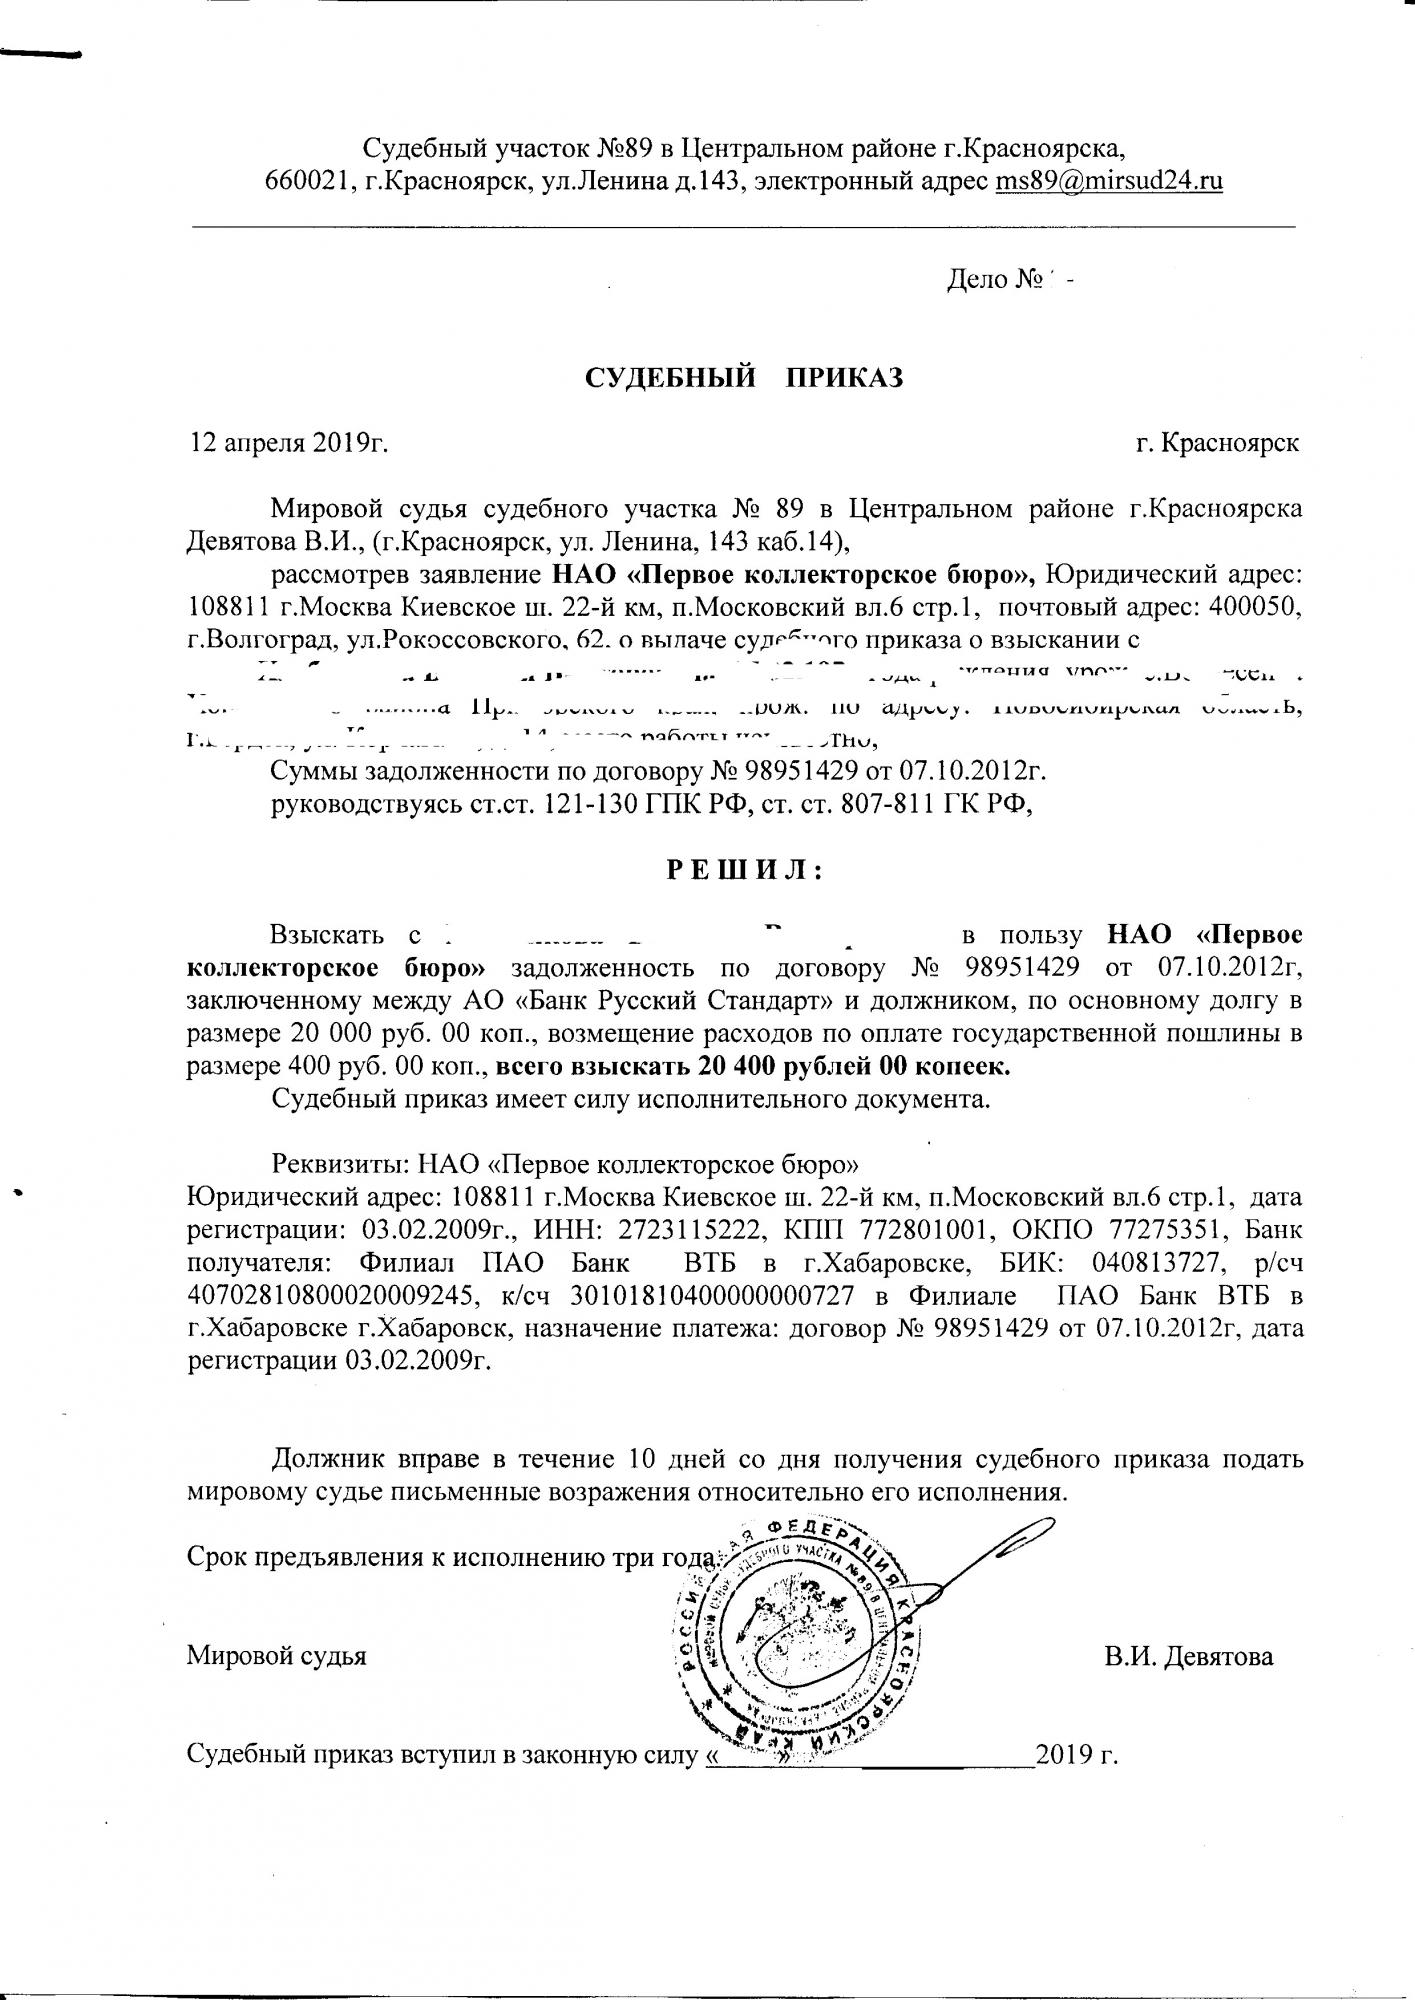 скан суд.приказов Хлебников0002 (5).jpg